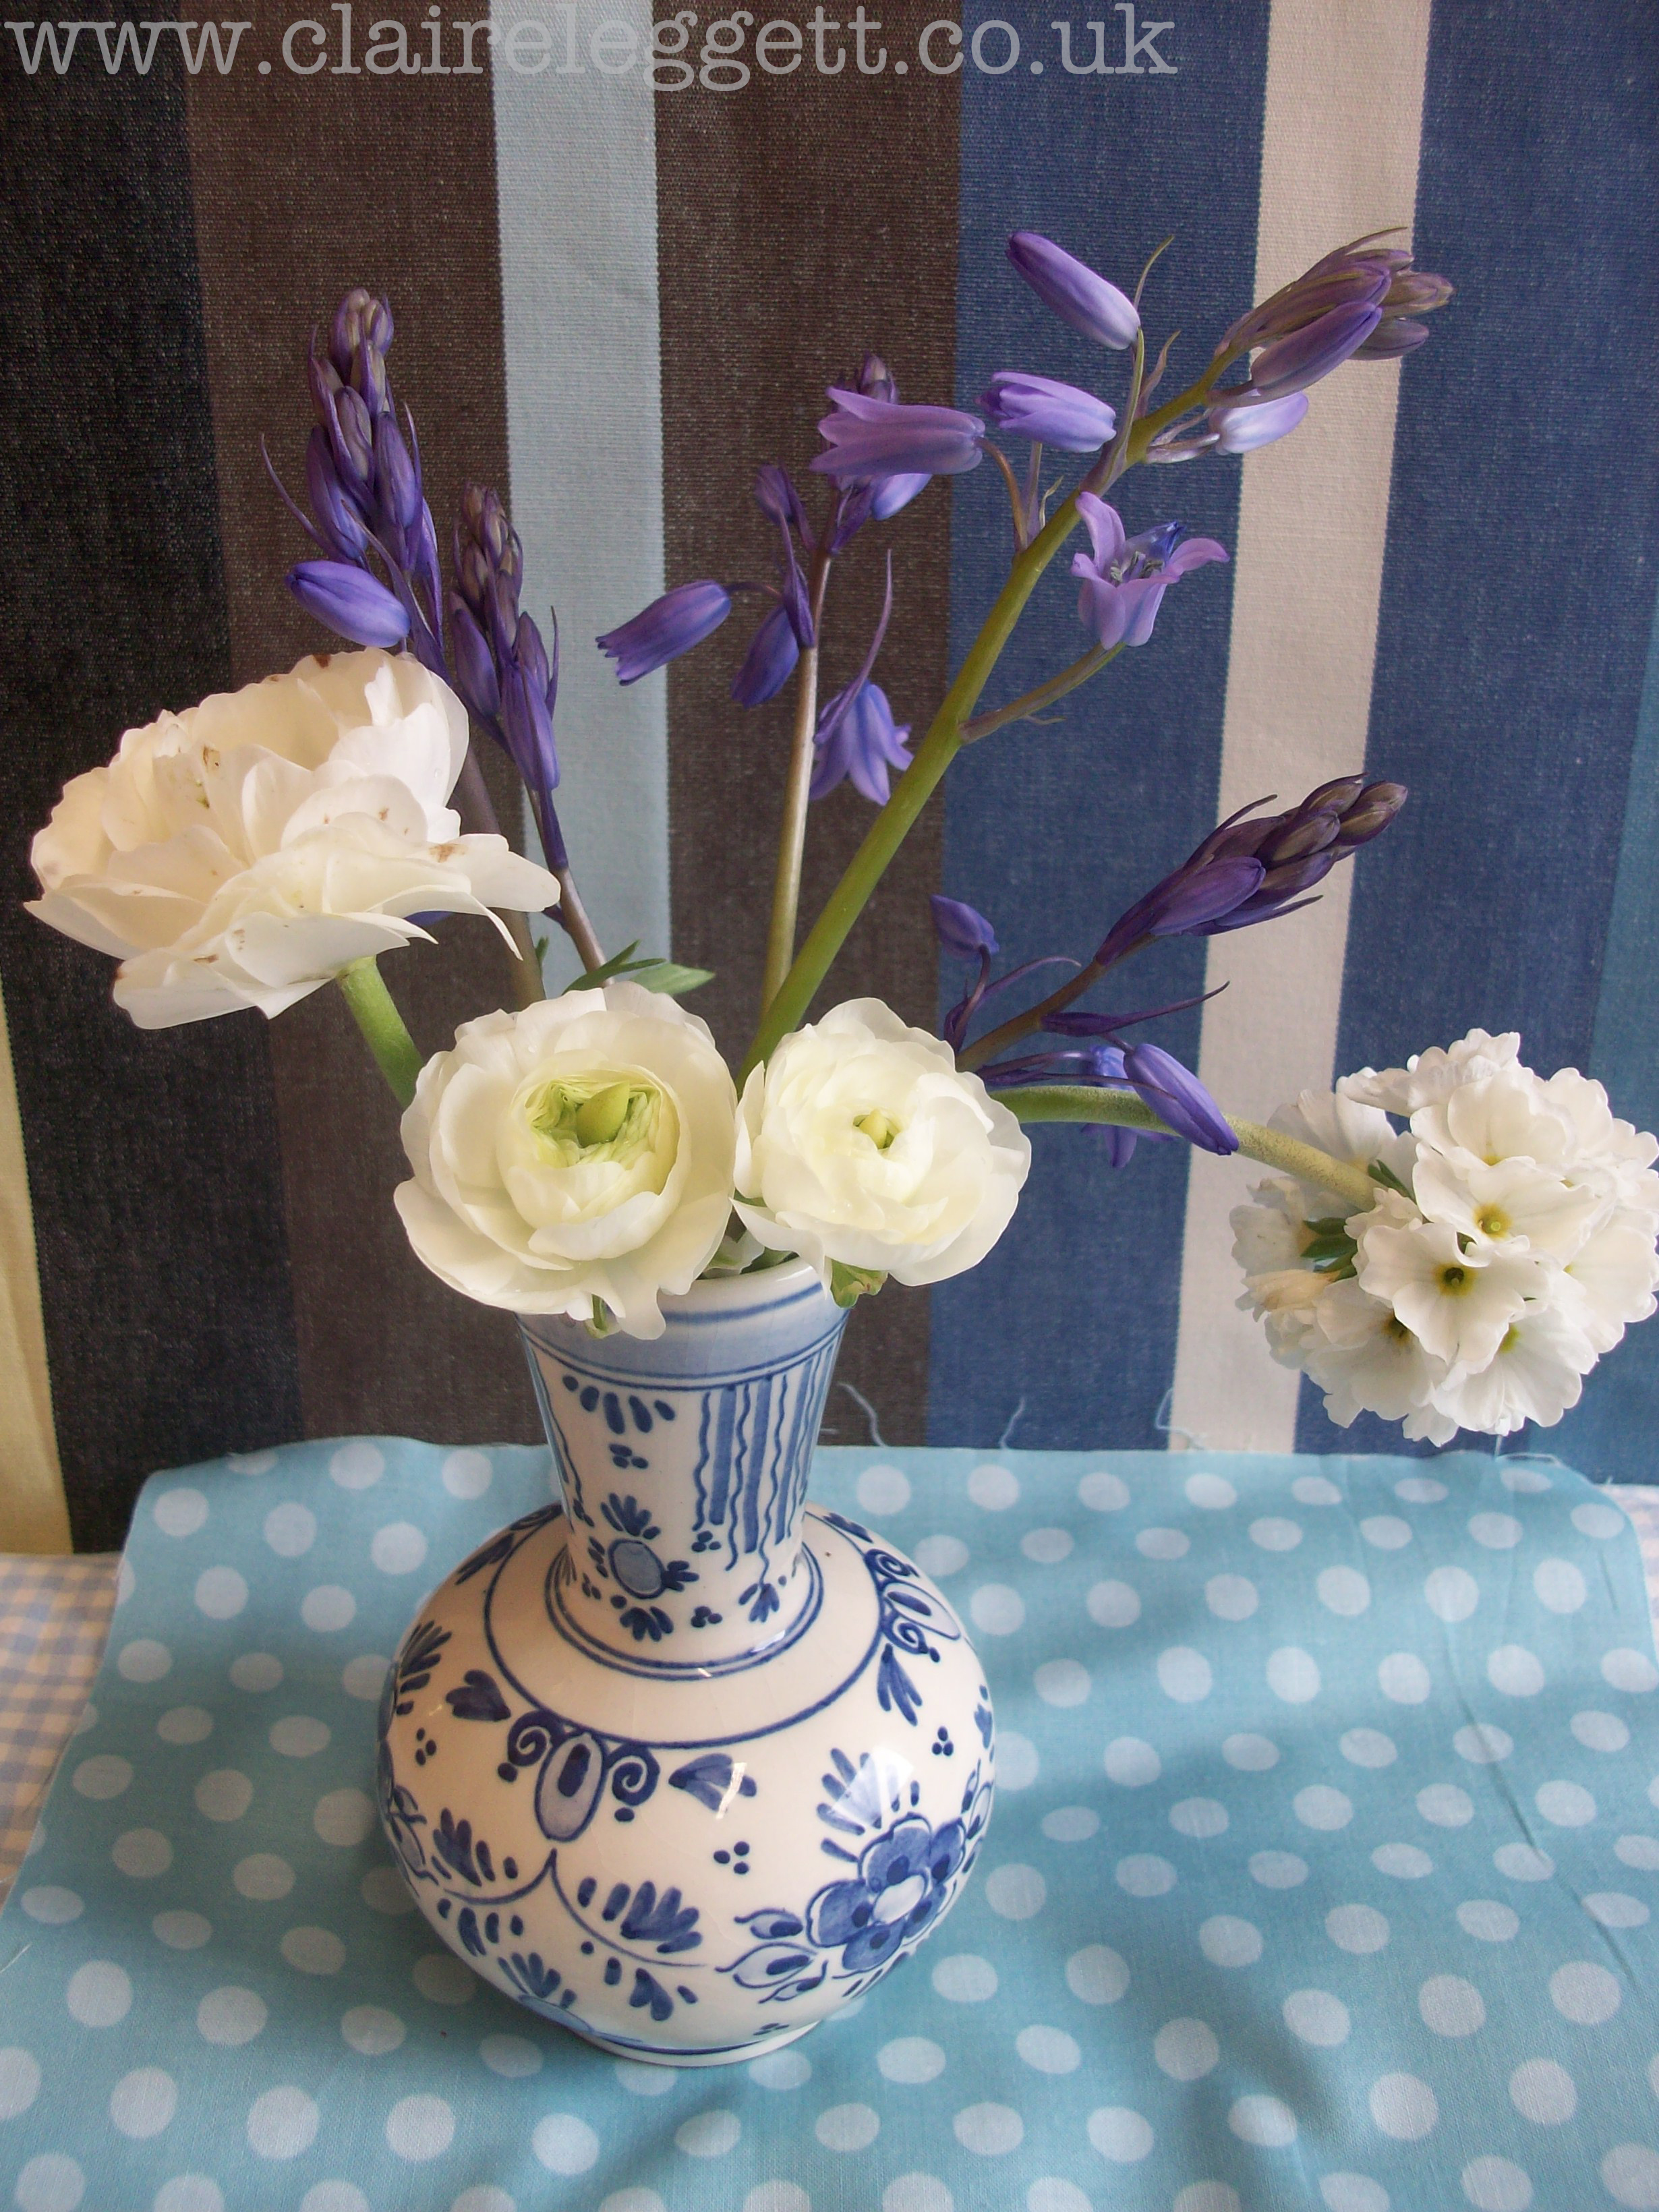 Claire_leggett_Ranunculus and Bluebells_set up